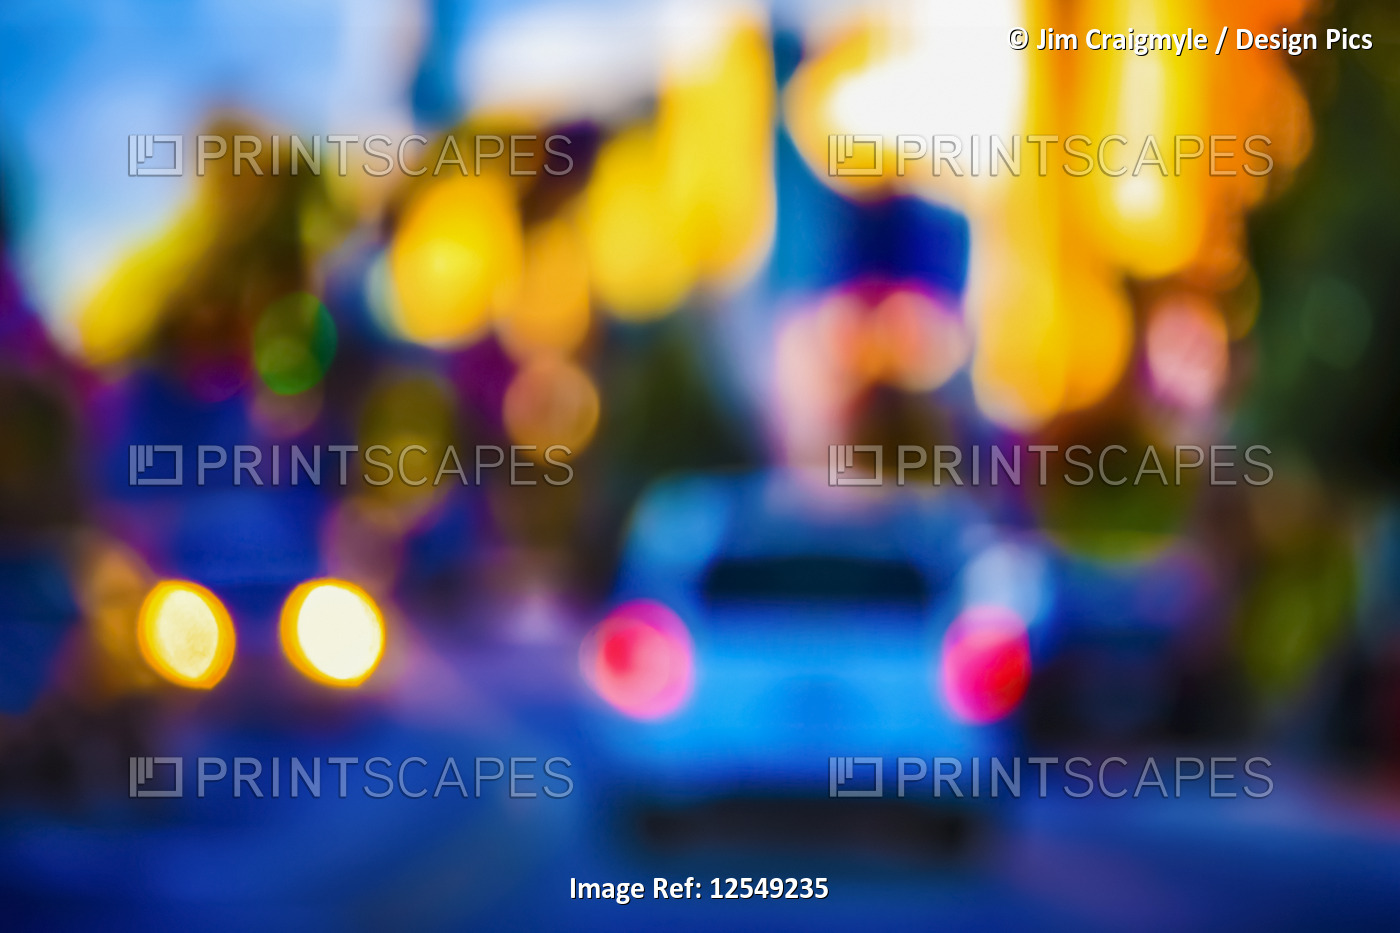 Heavily blurred street scene; Toronto, Ontario, Canada